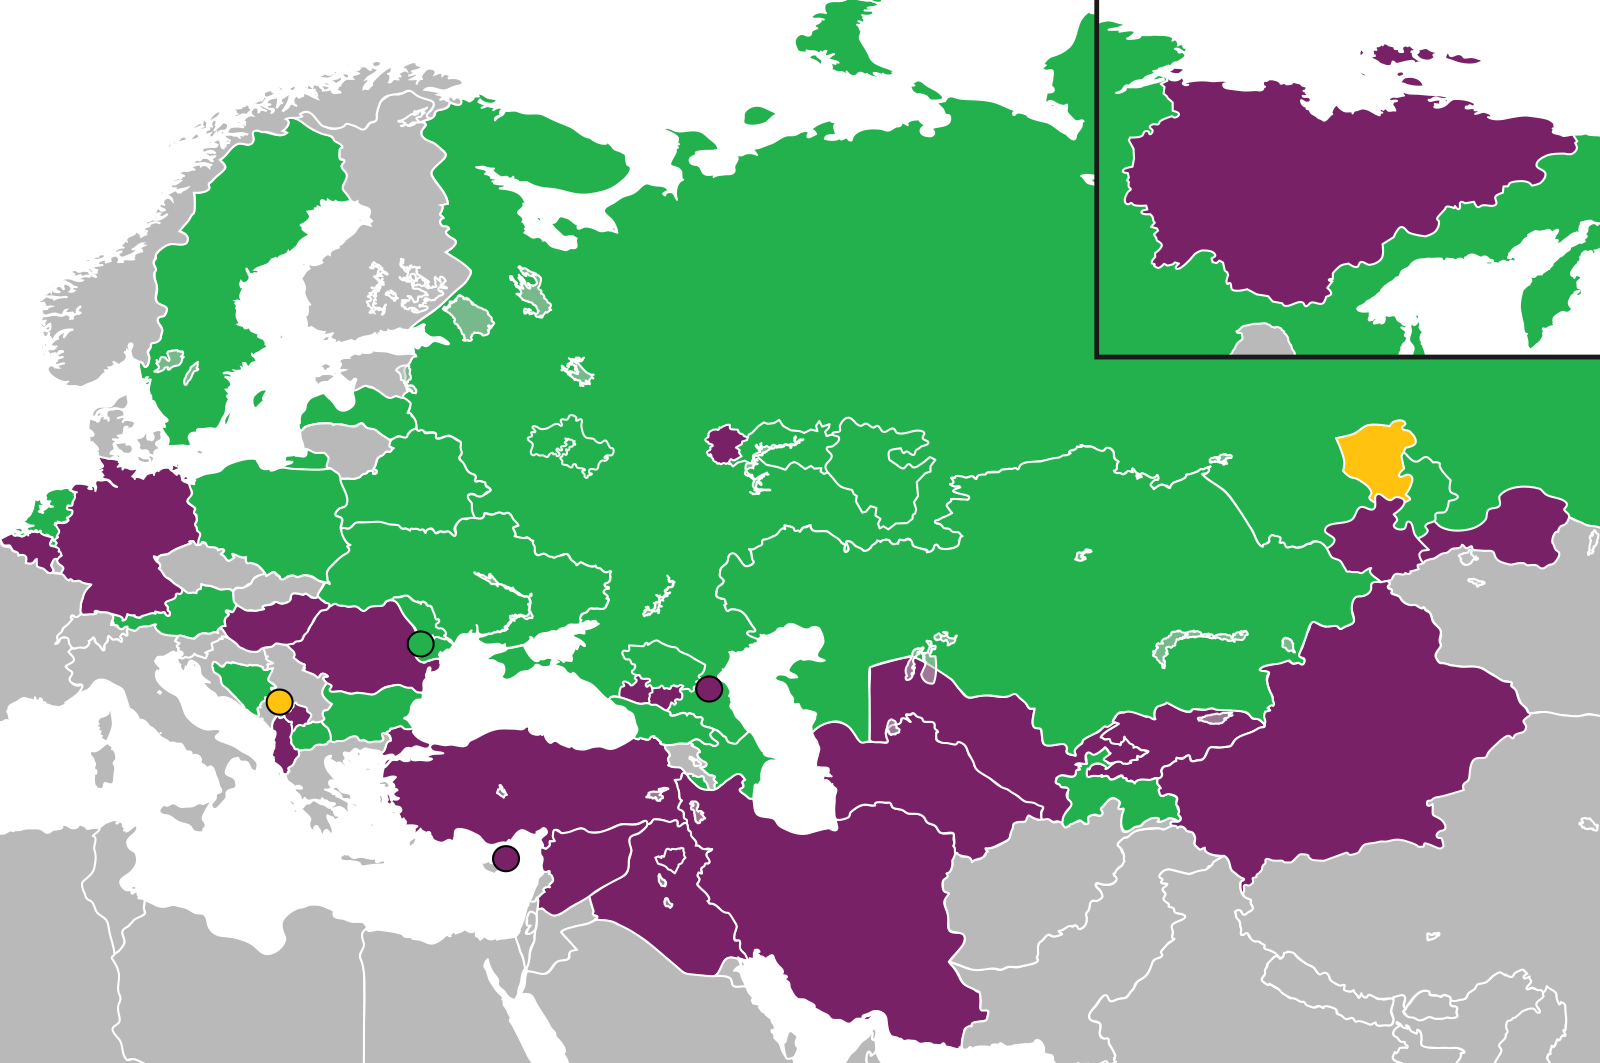 Карта тюркских стран